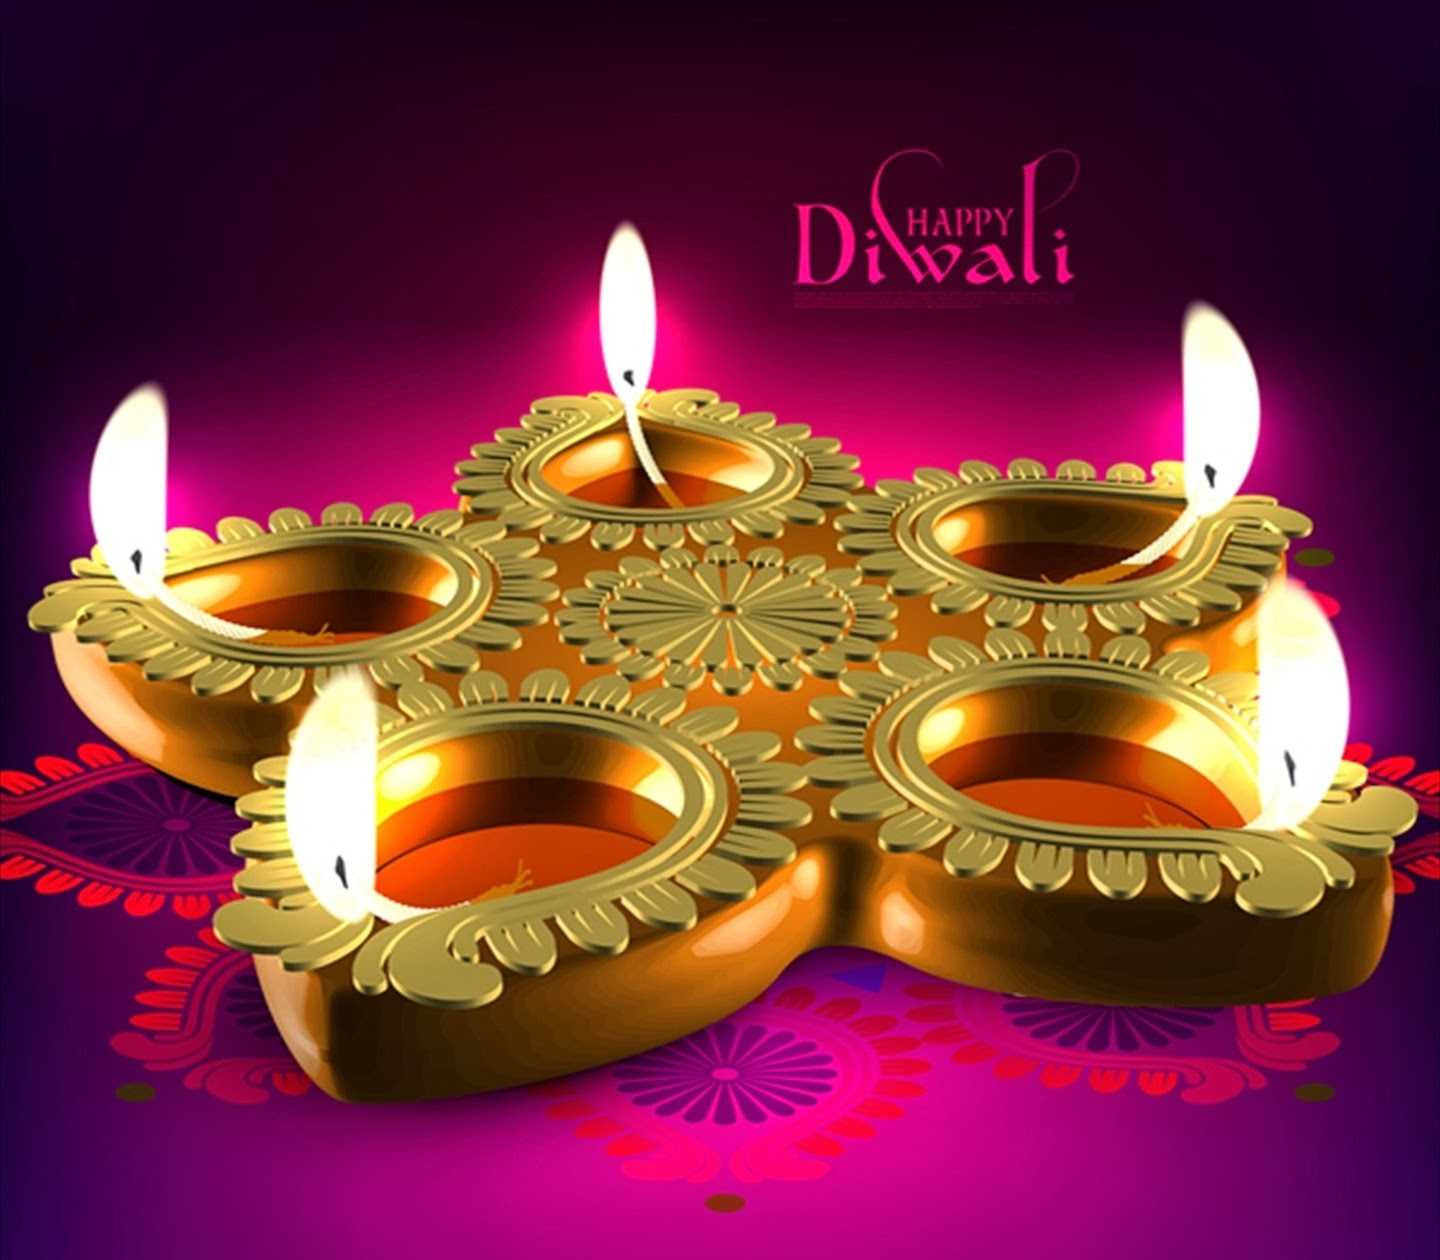 Happy Diwali Whatsapp Images